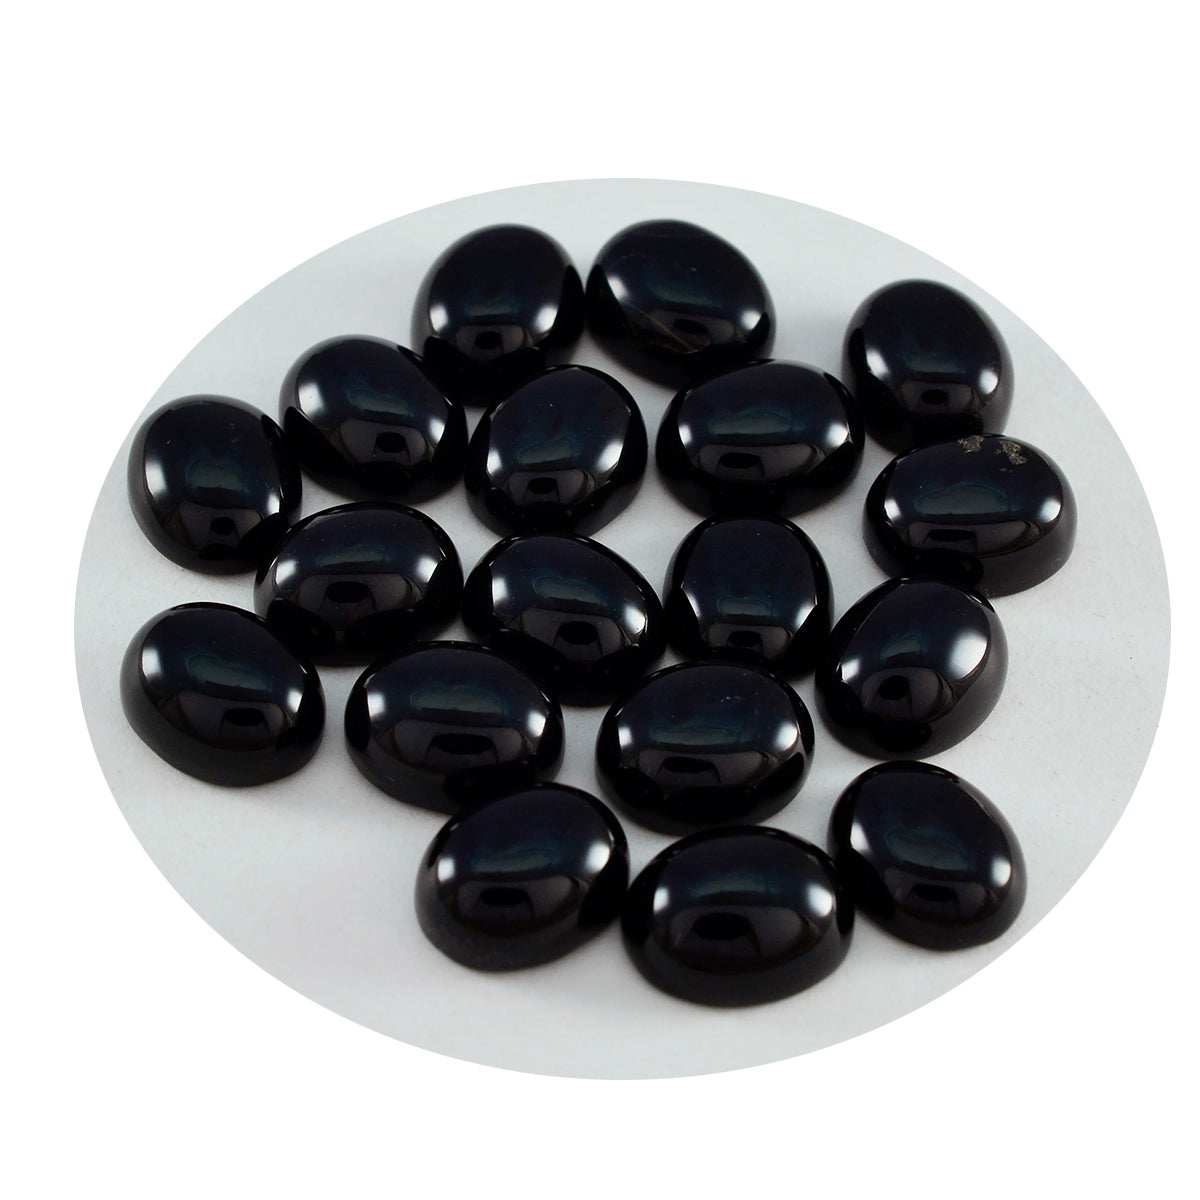 Riyogems 1PC Black Onyx Cabochon 5x7 mm Oval Shape nice-looking Quality Stone